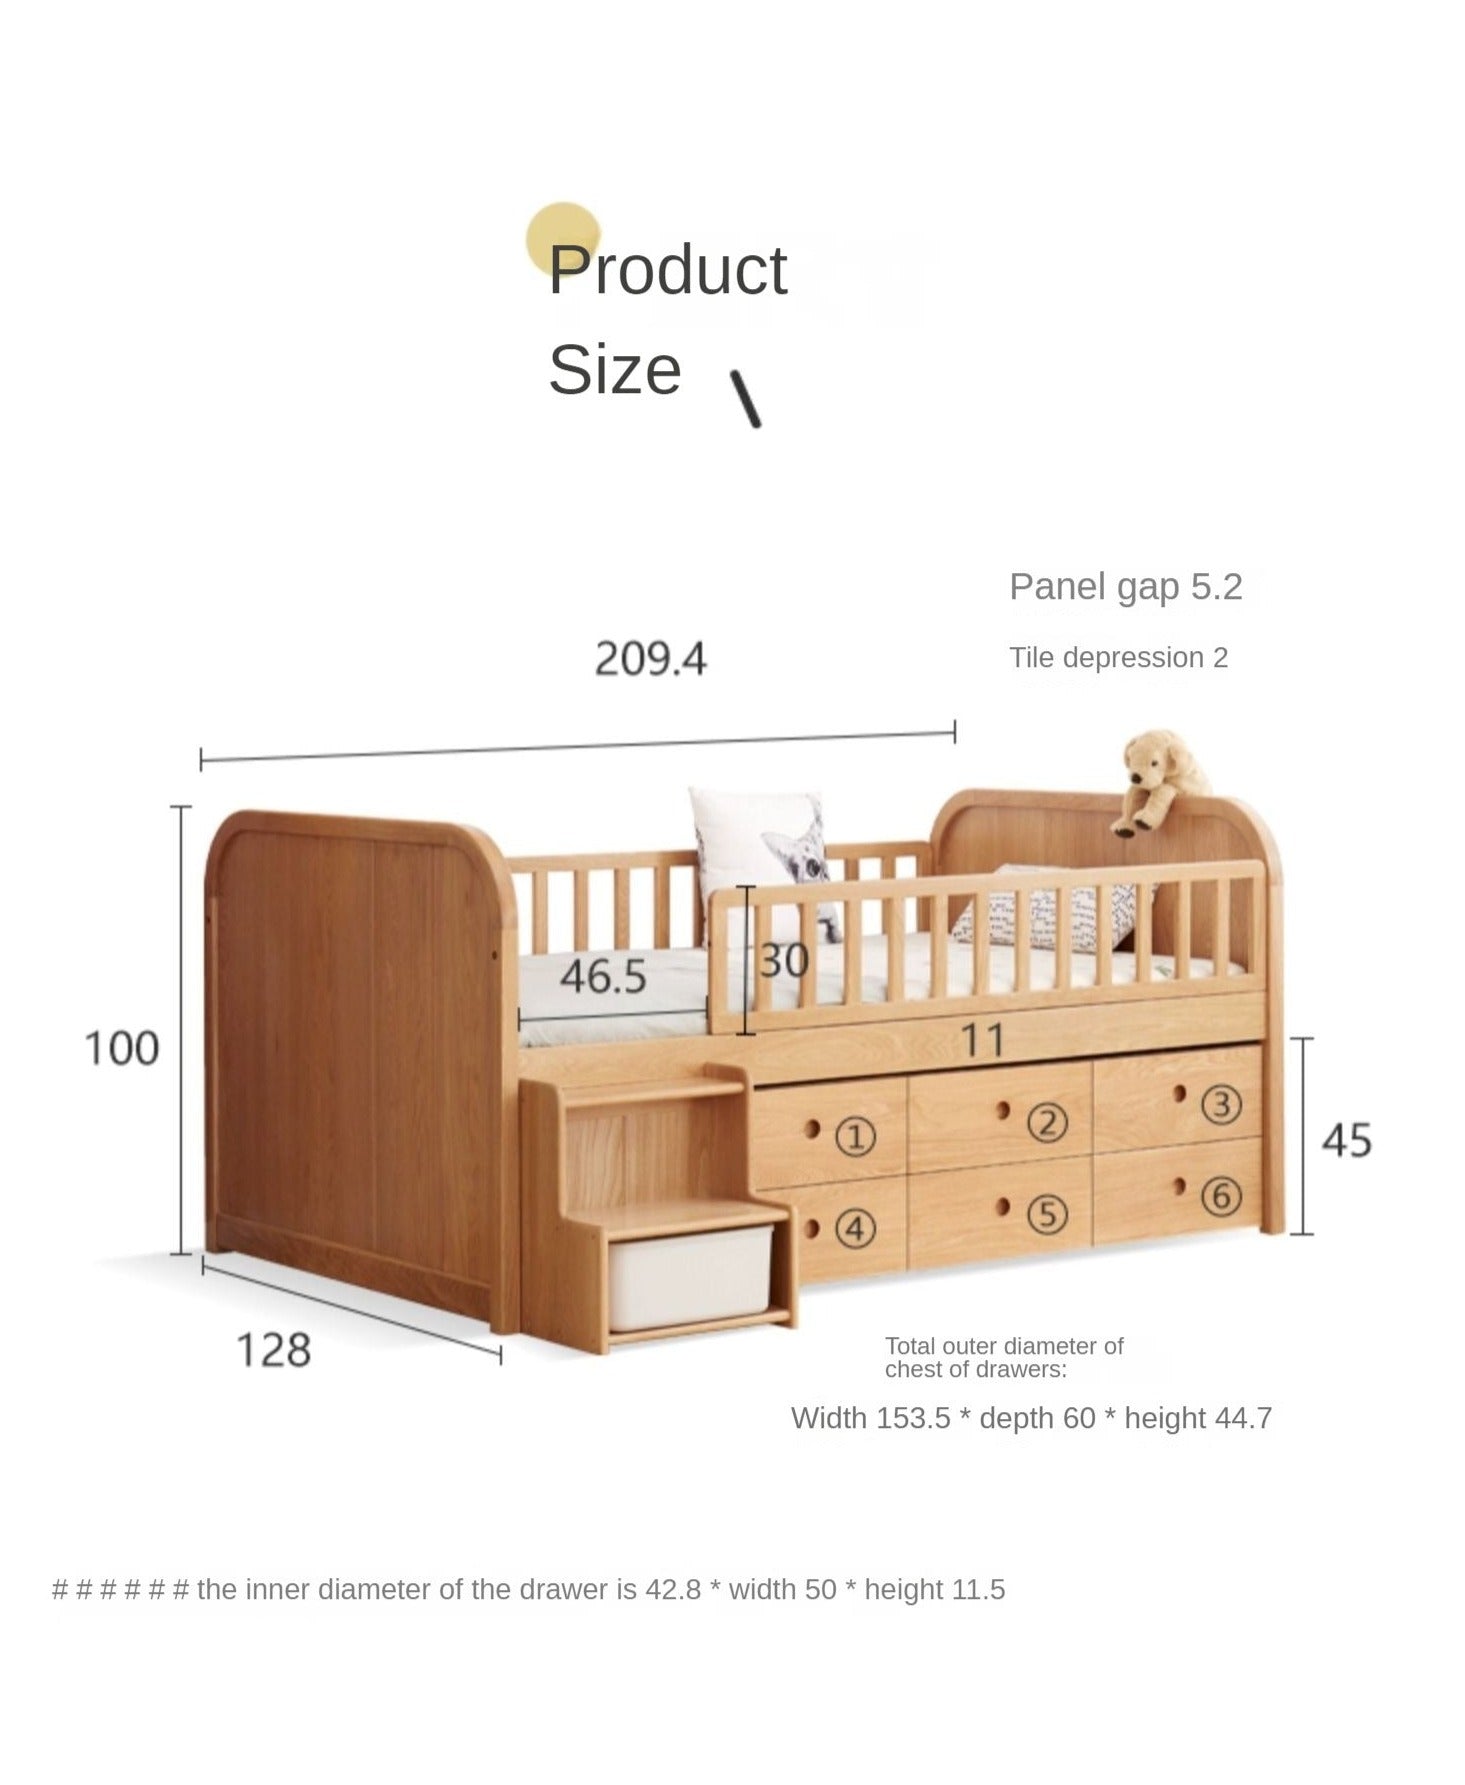 Multi-function wide storage box bed oak solid wood"